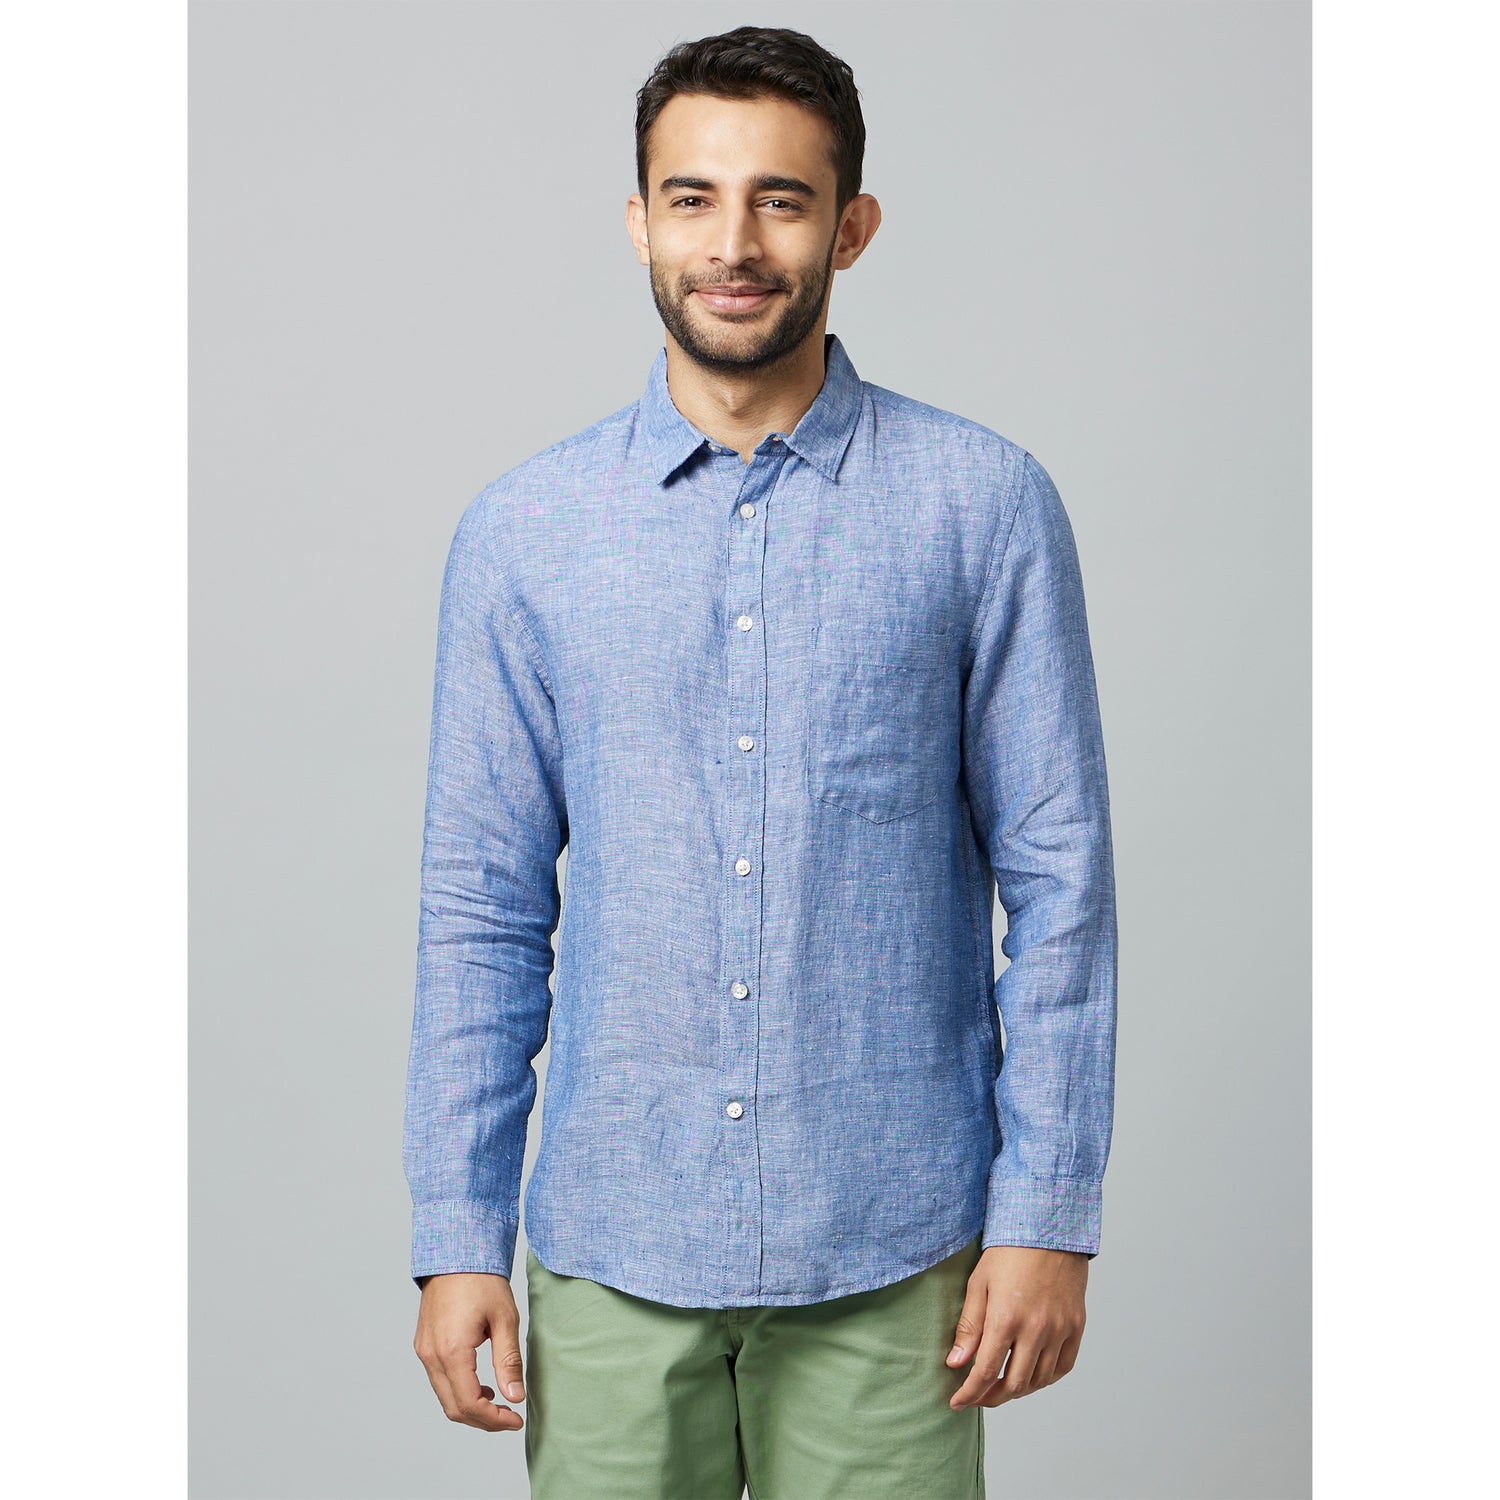 Solid Blue Long Sleeves Linen Shirt